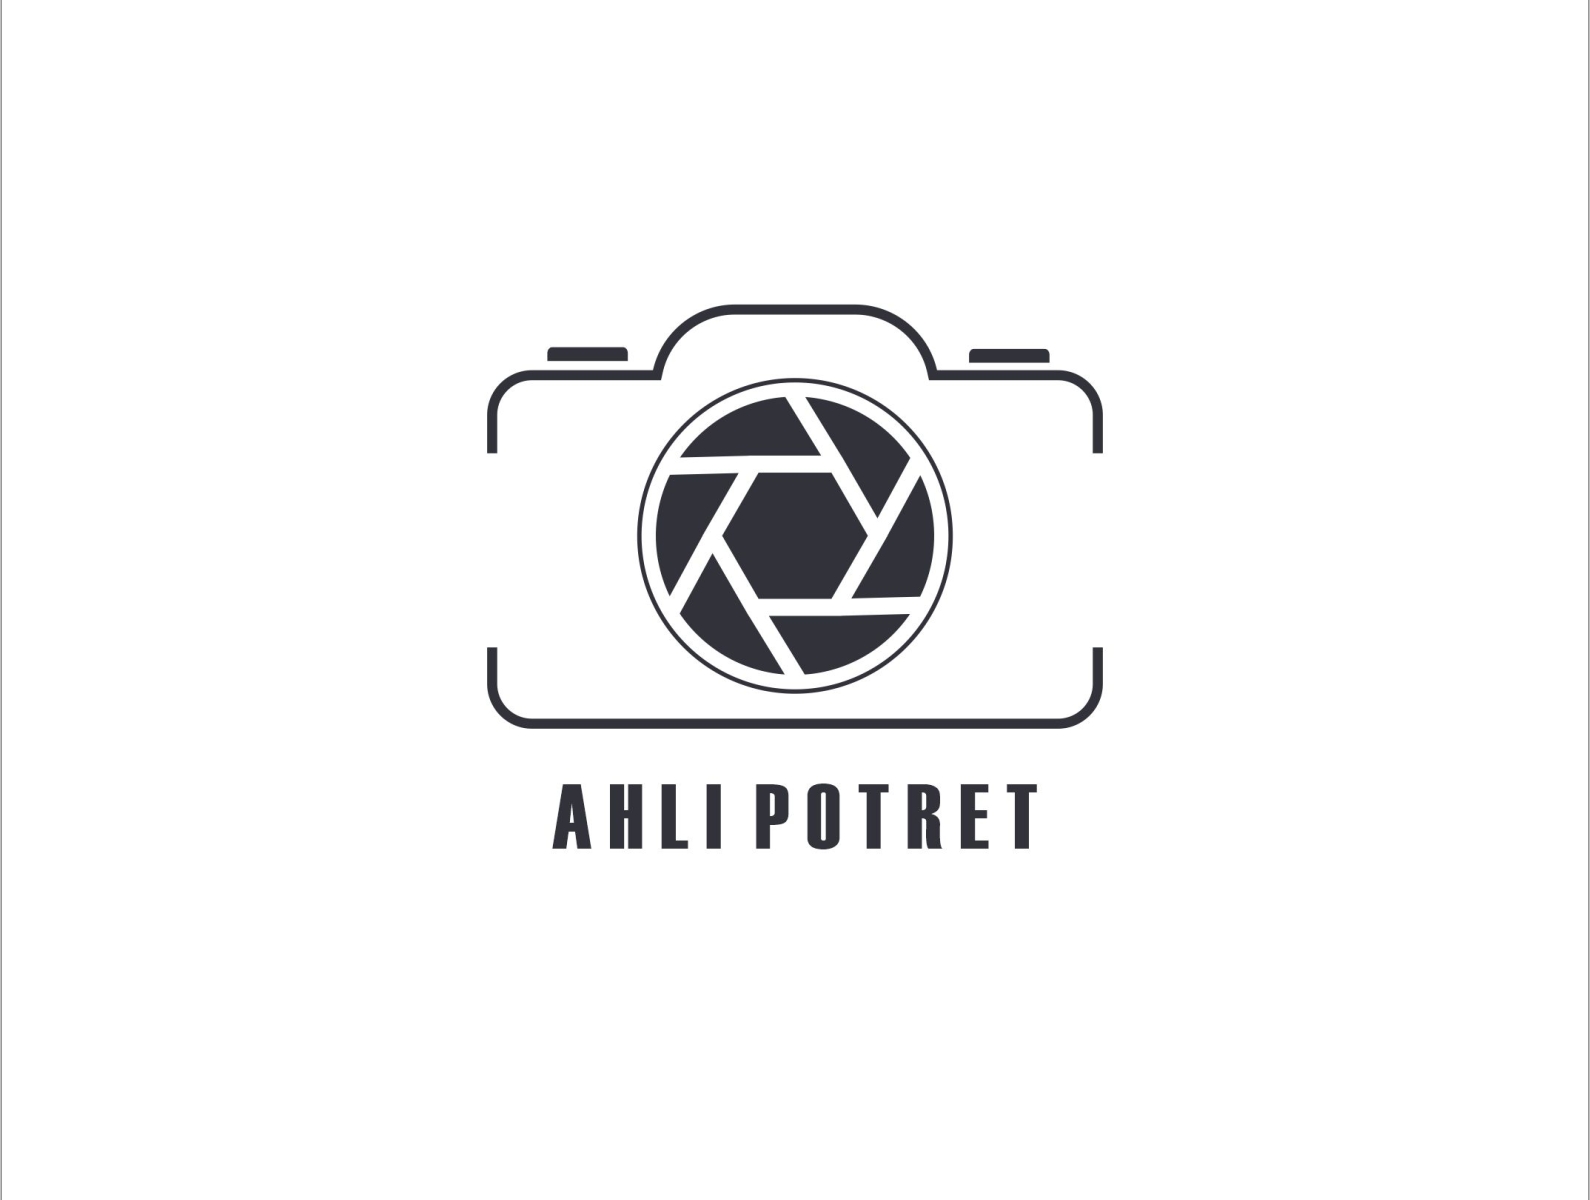 Photography Logo (Ahli Potret) by Danang E Novianto on Dribbble